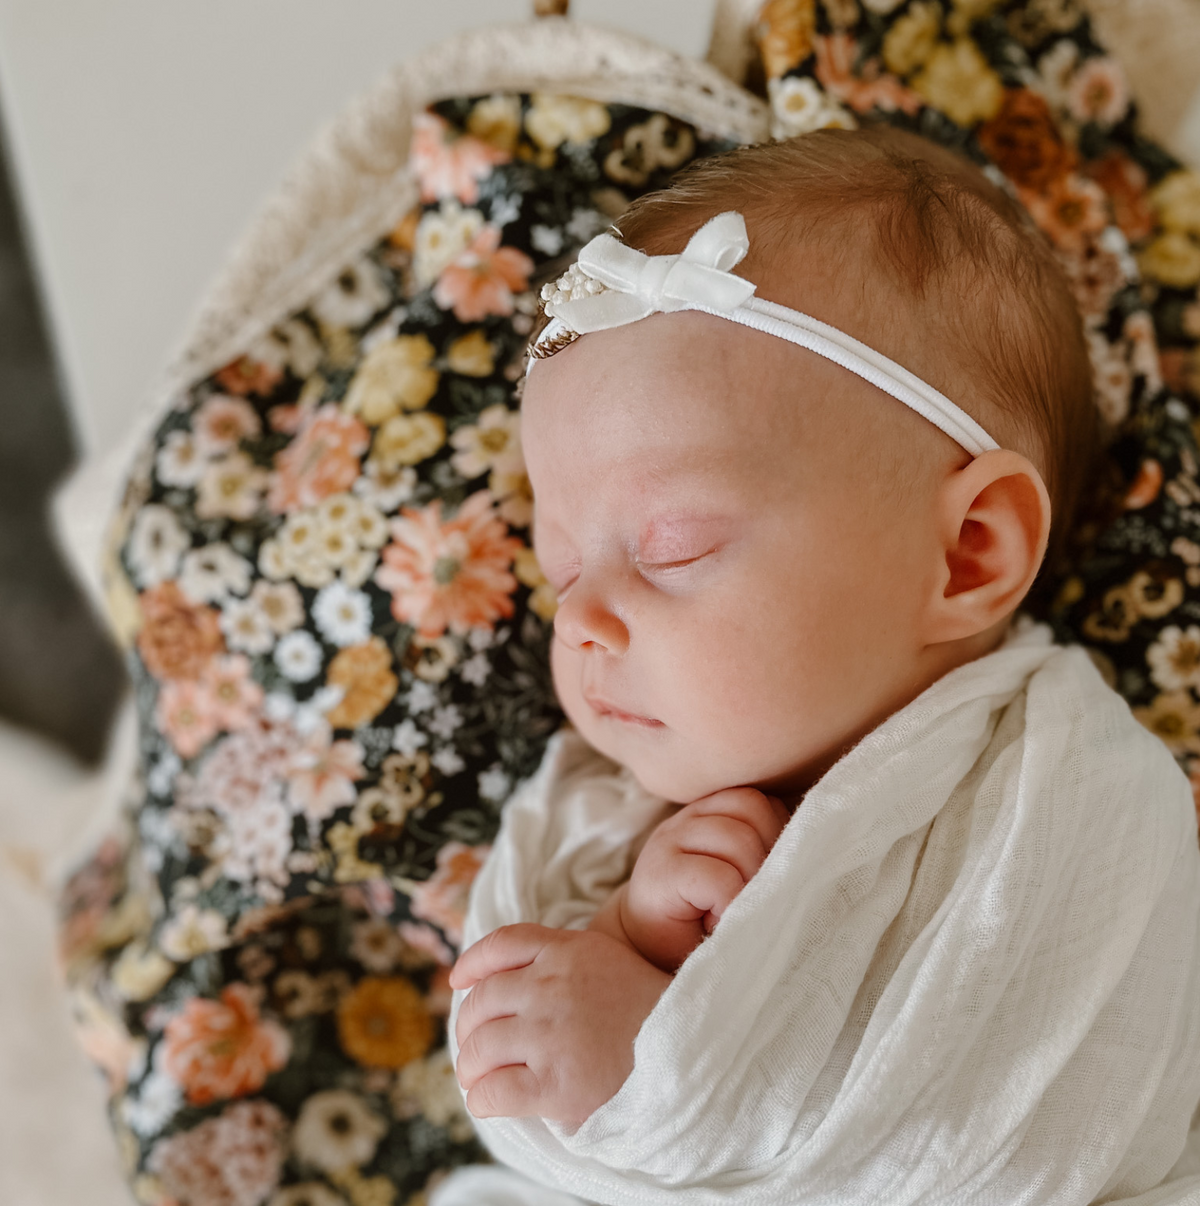 Diy newborn photos using a heirloom baby blanket 